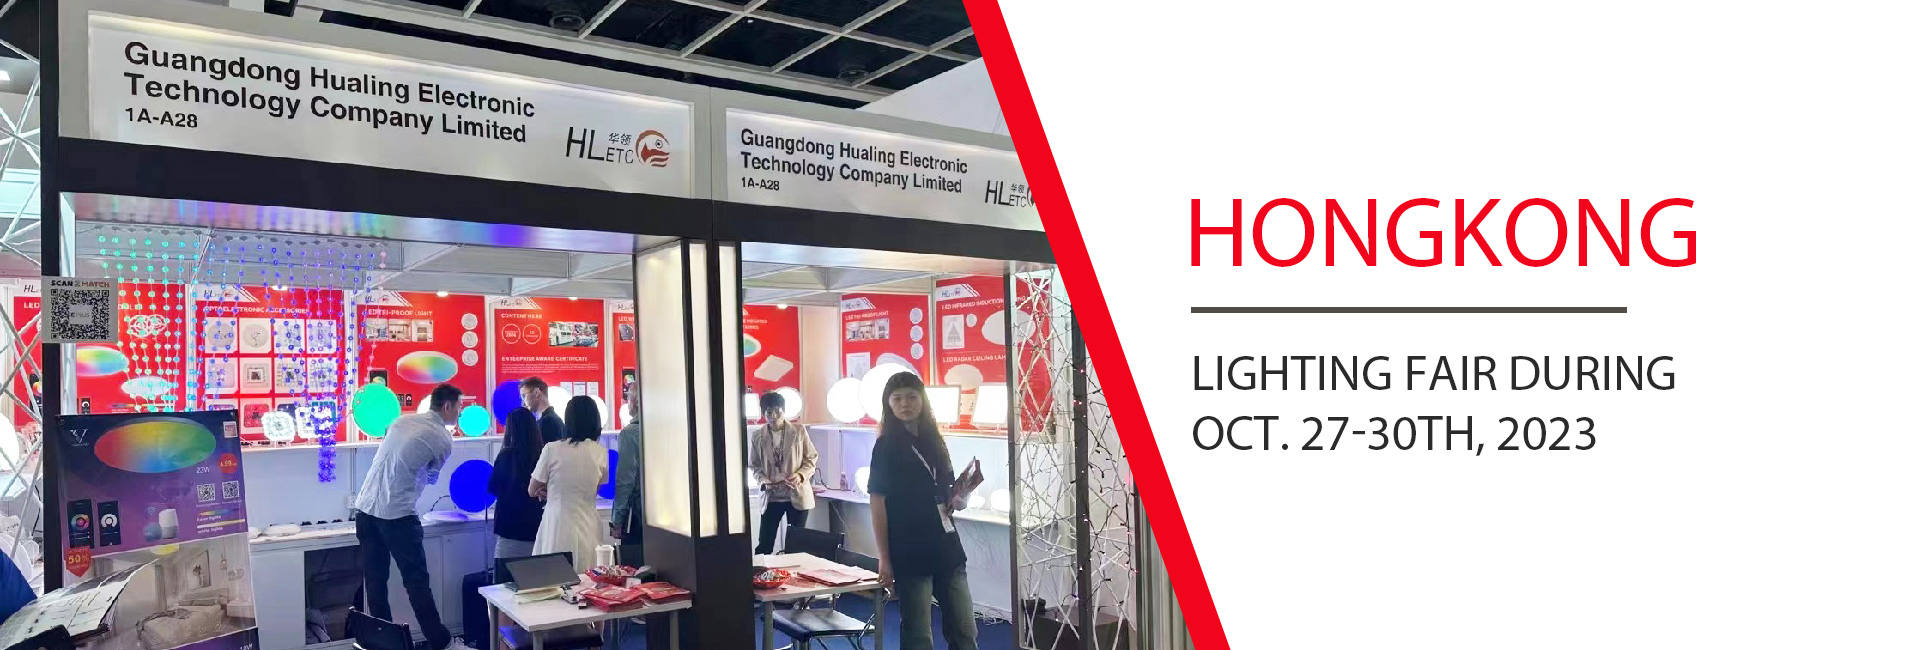 Hongkong Lighting Fair during Oct. 27-30th, 2023